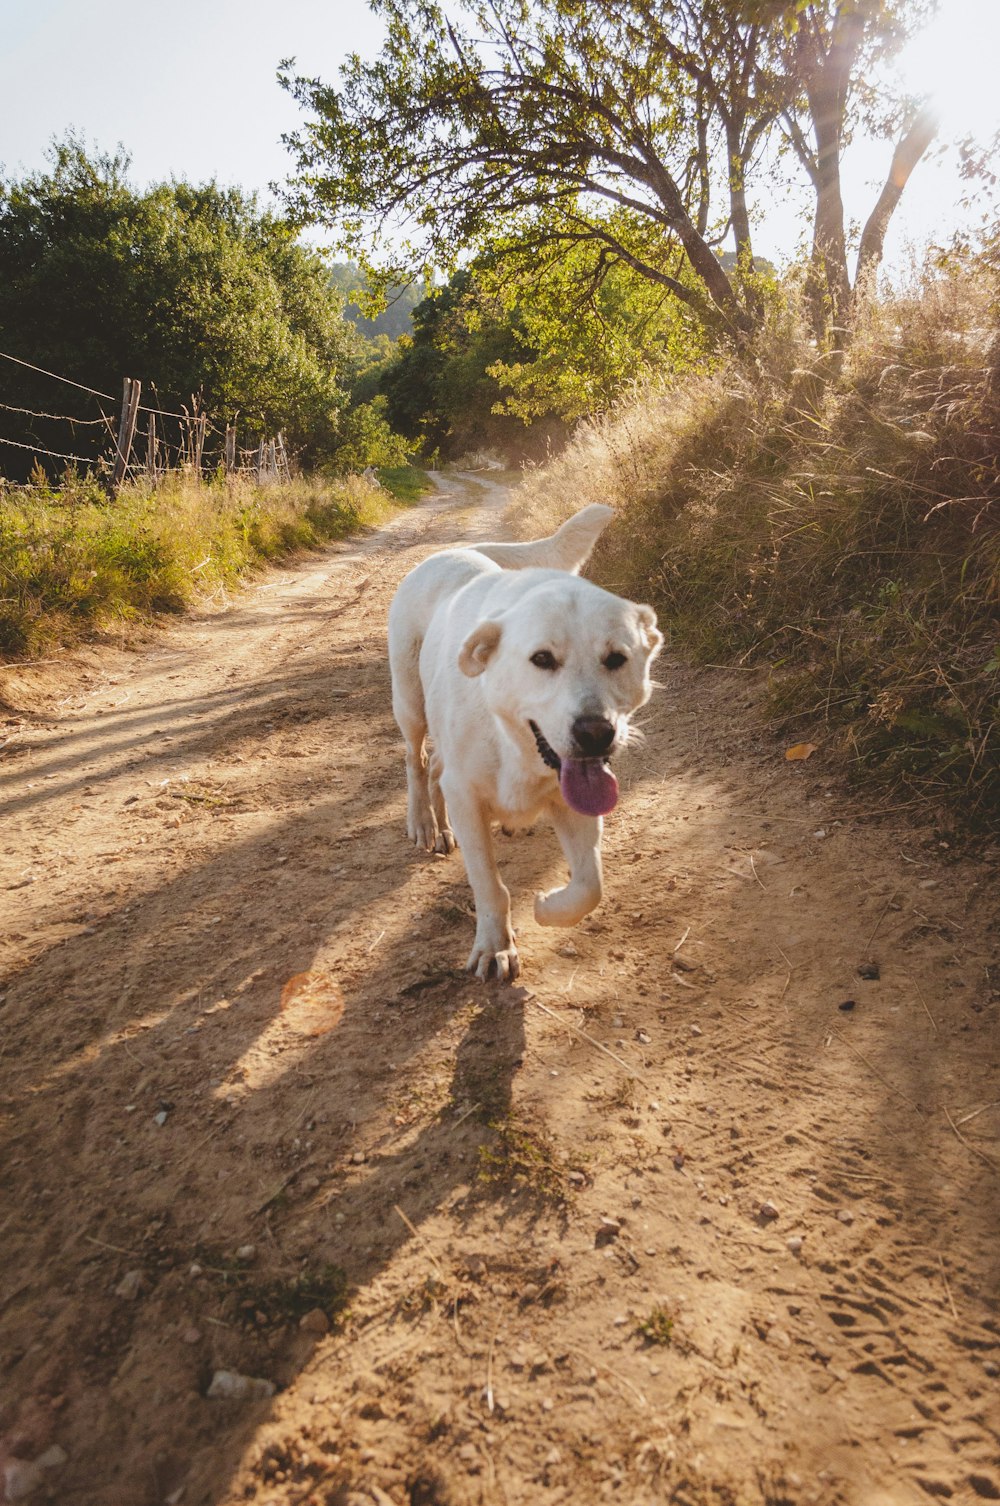 white short coated dog walking on brown dirt road during daytime